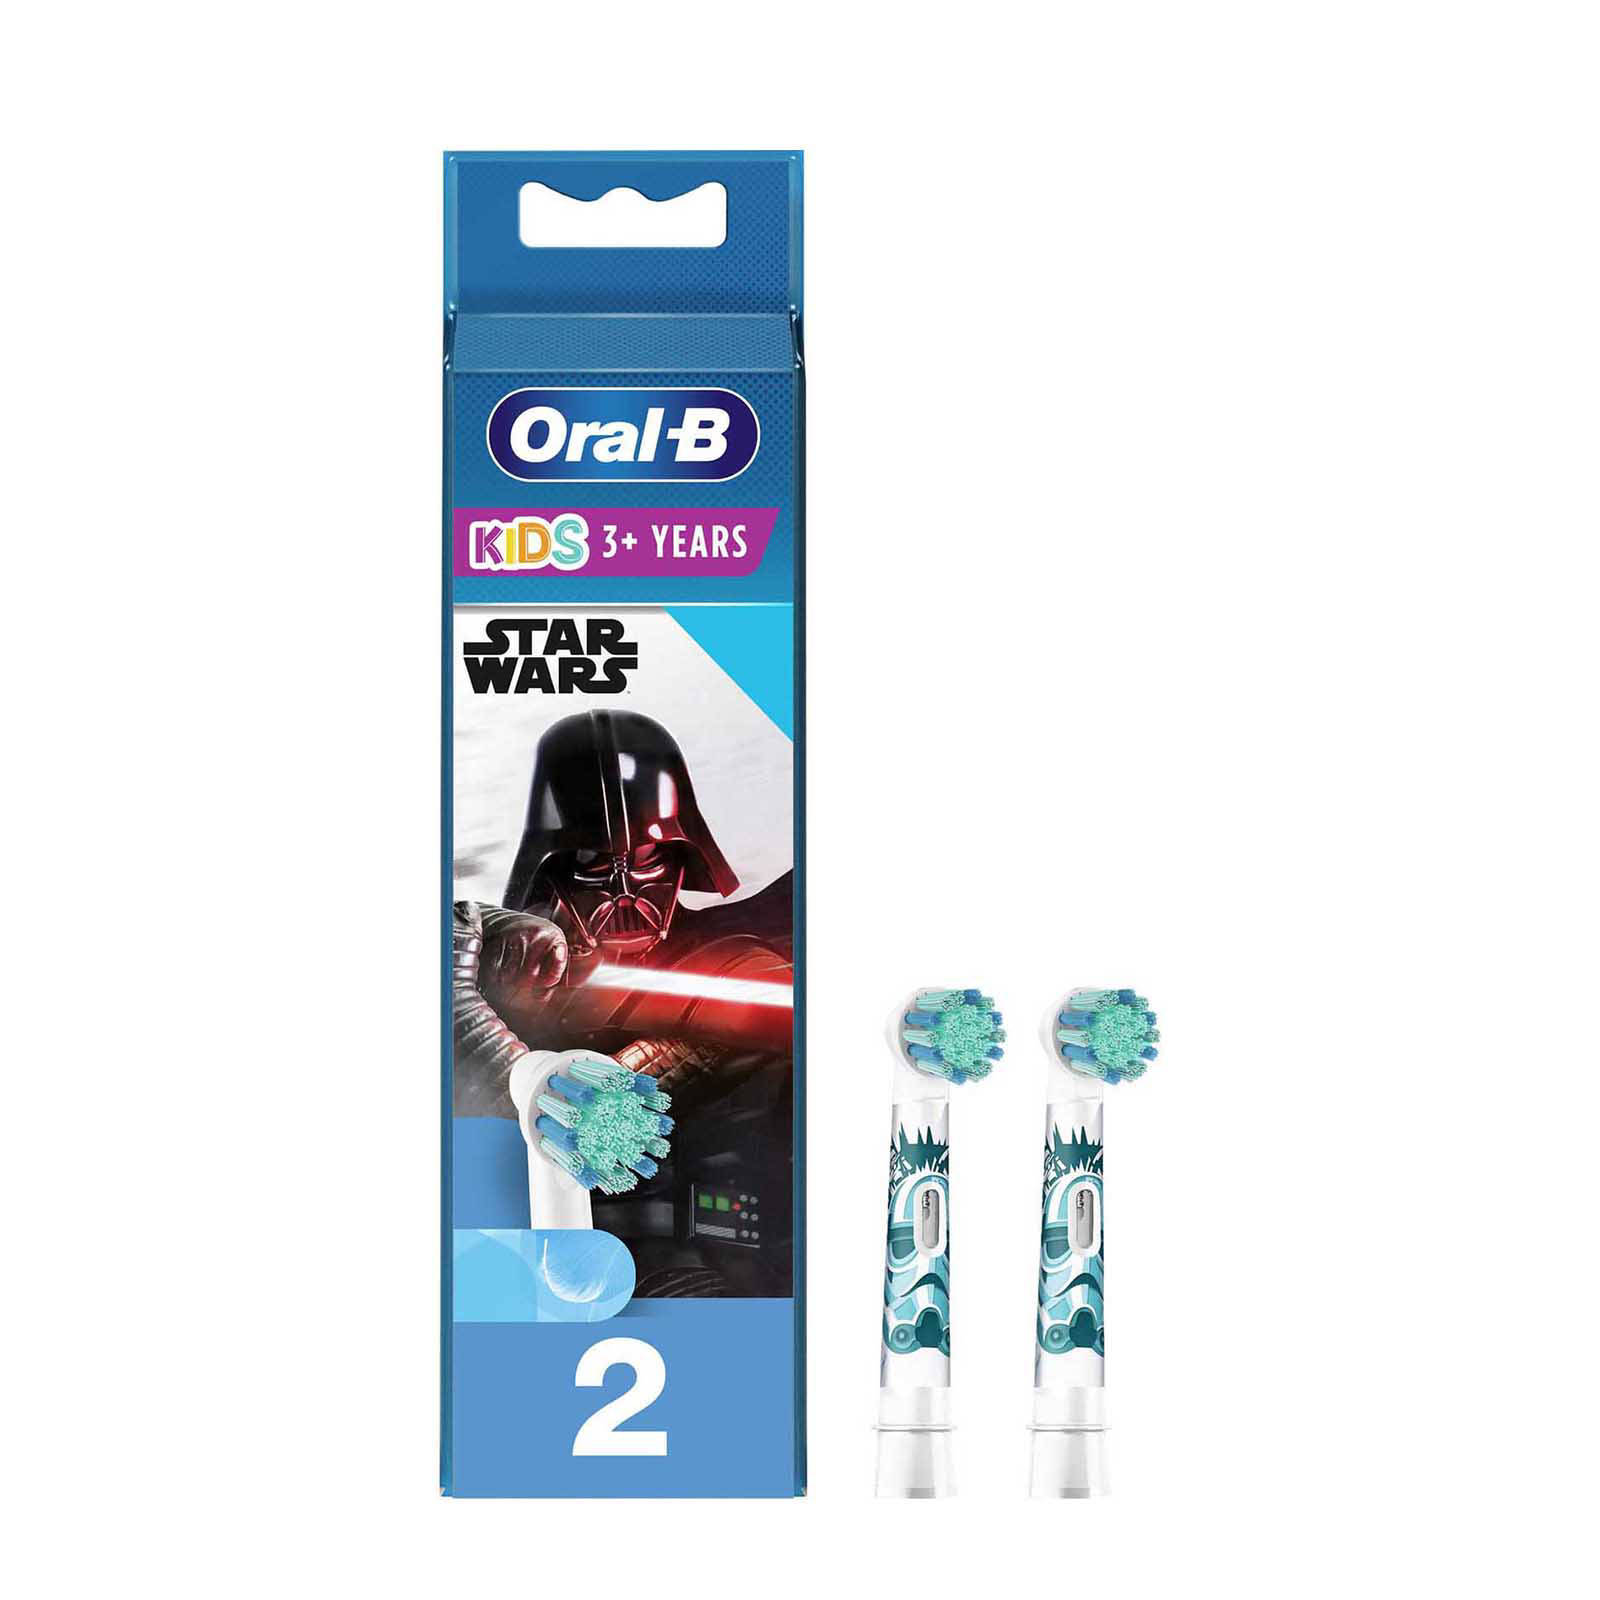 Oral-B Oral B Kids Star Wars opzetborstels(2 stuks ) online kopen